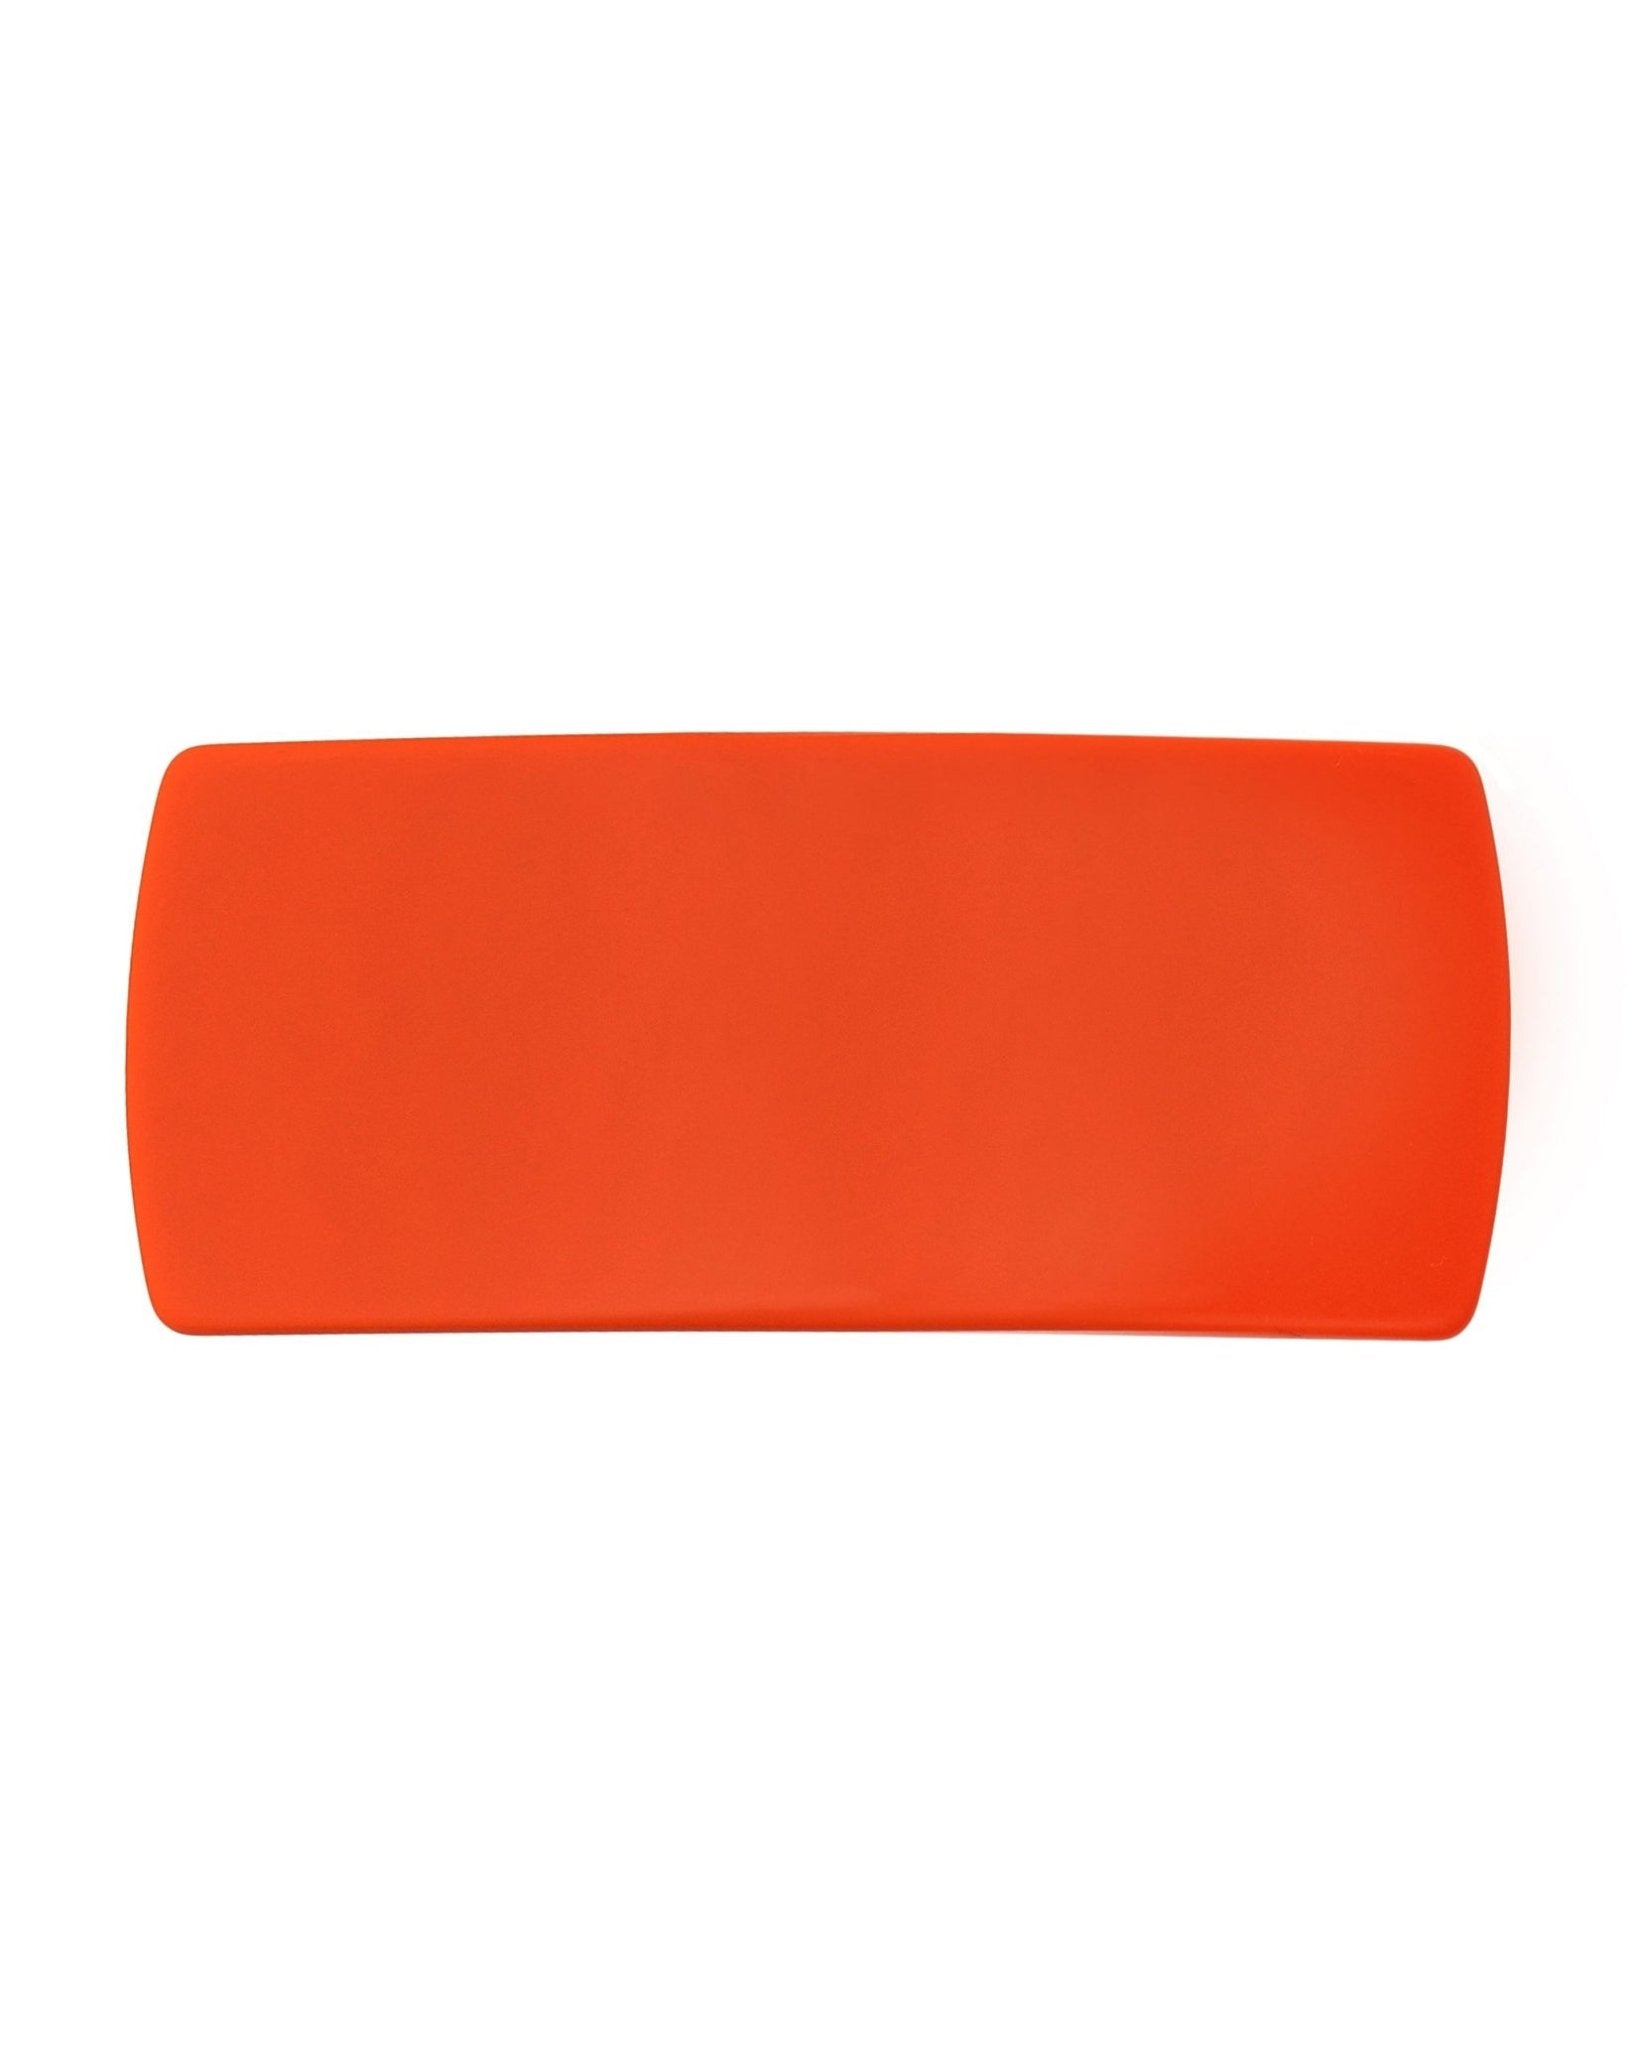 Jumbo Box Clip in Bright Orange - MACHETE